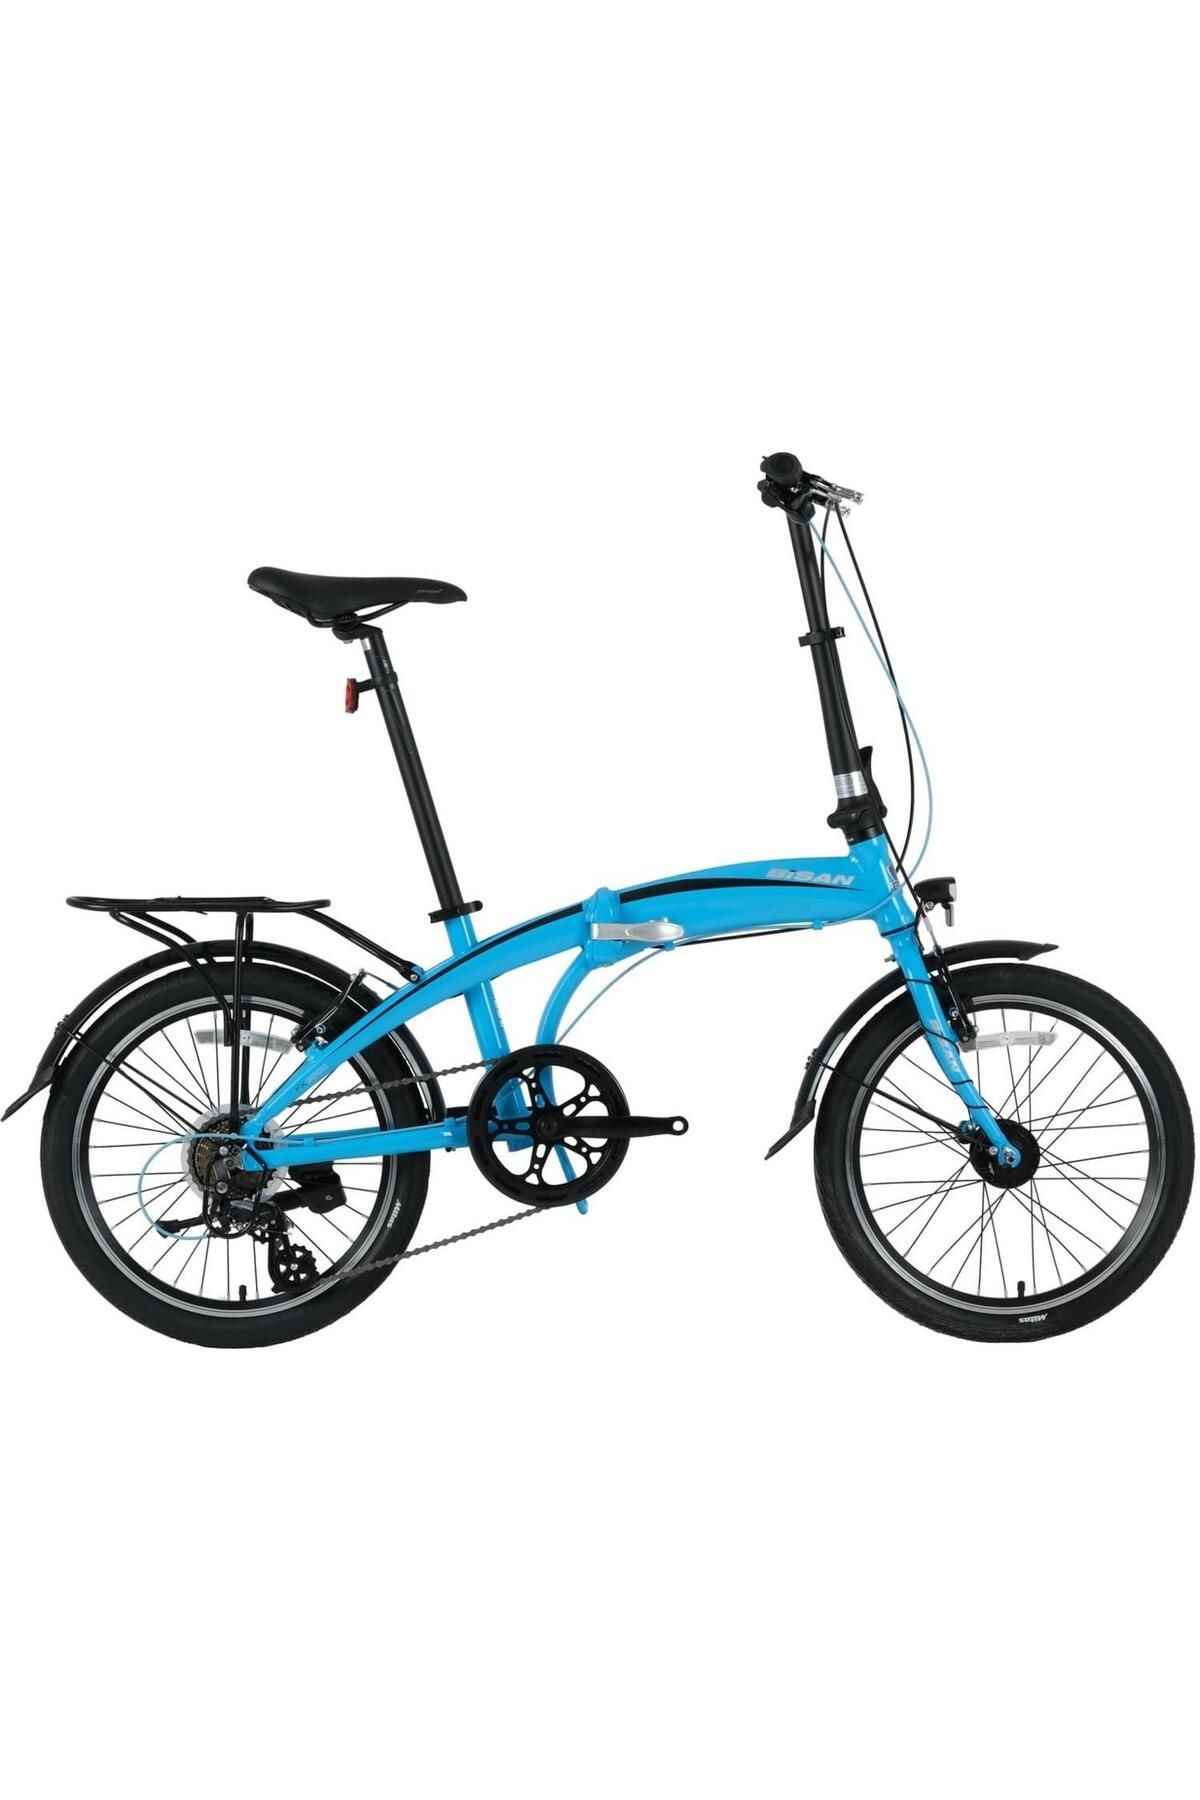 Bisan Fx3500 V 20 Jant 32k Katlanır Bisiklet Açık Mavi-siyah